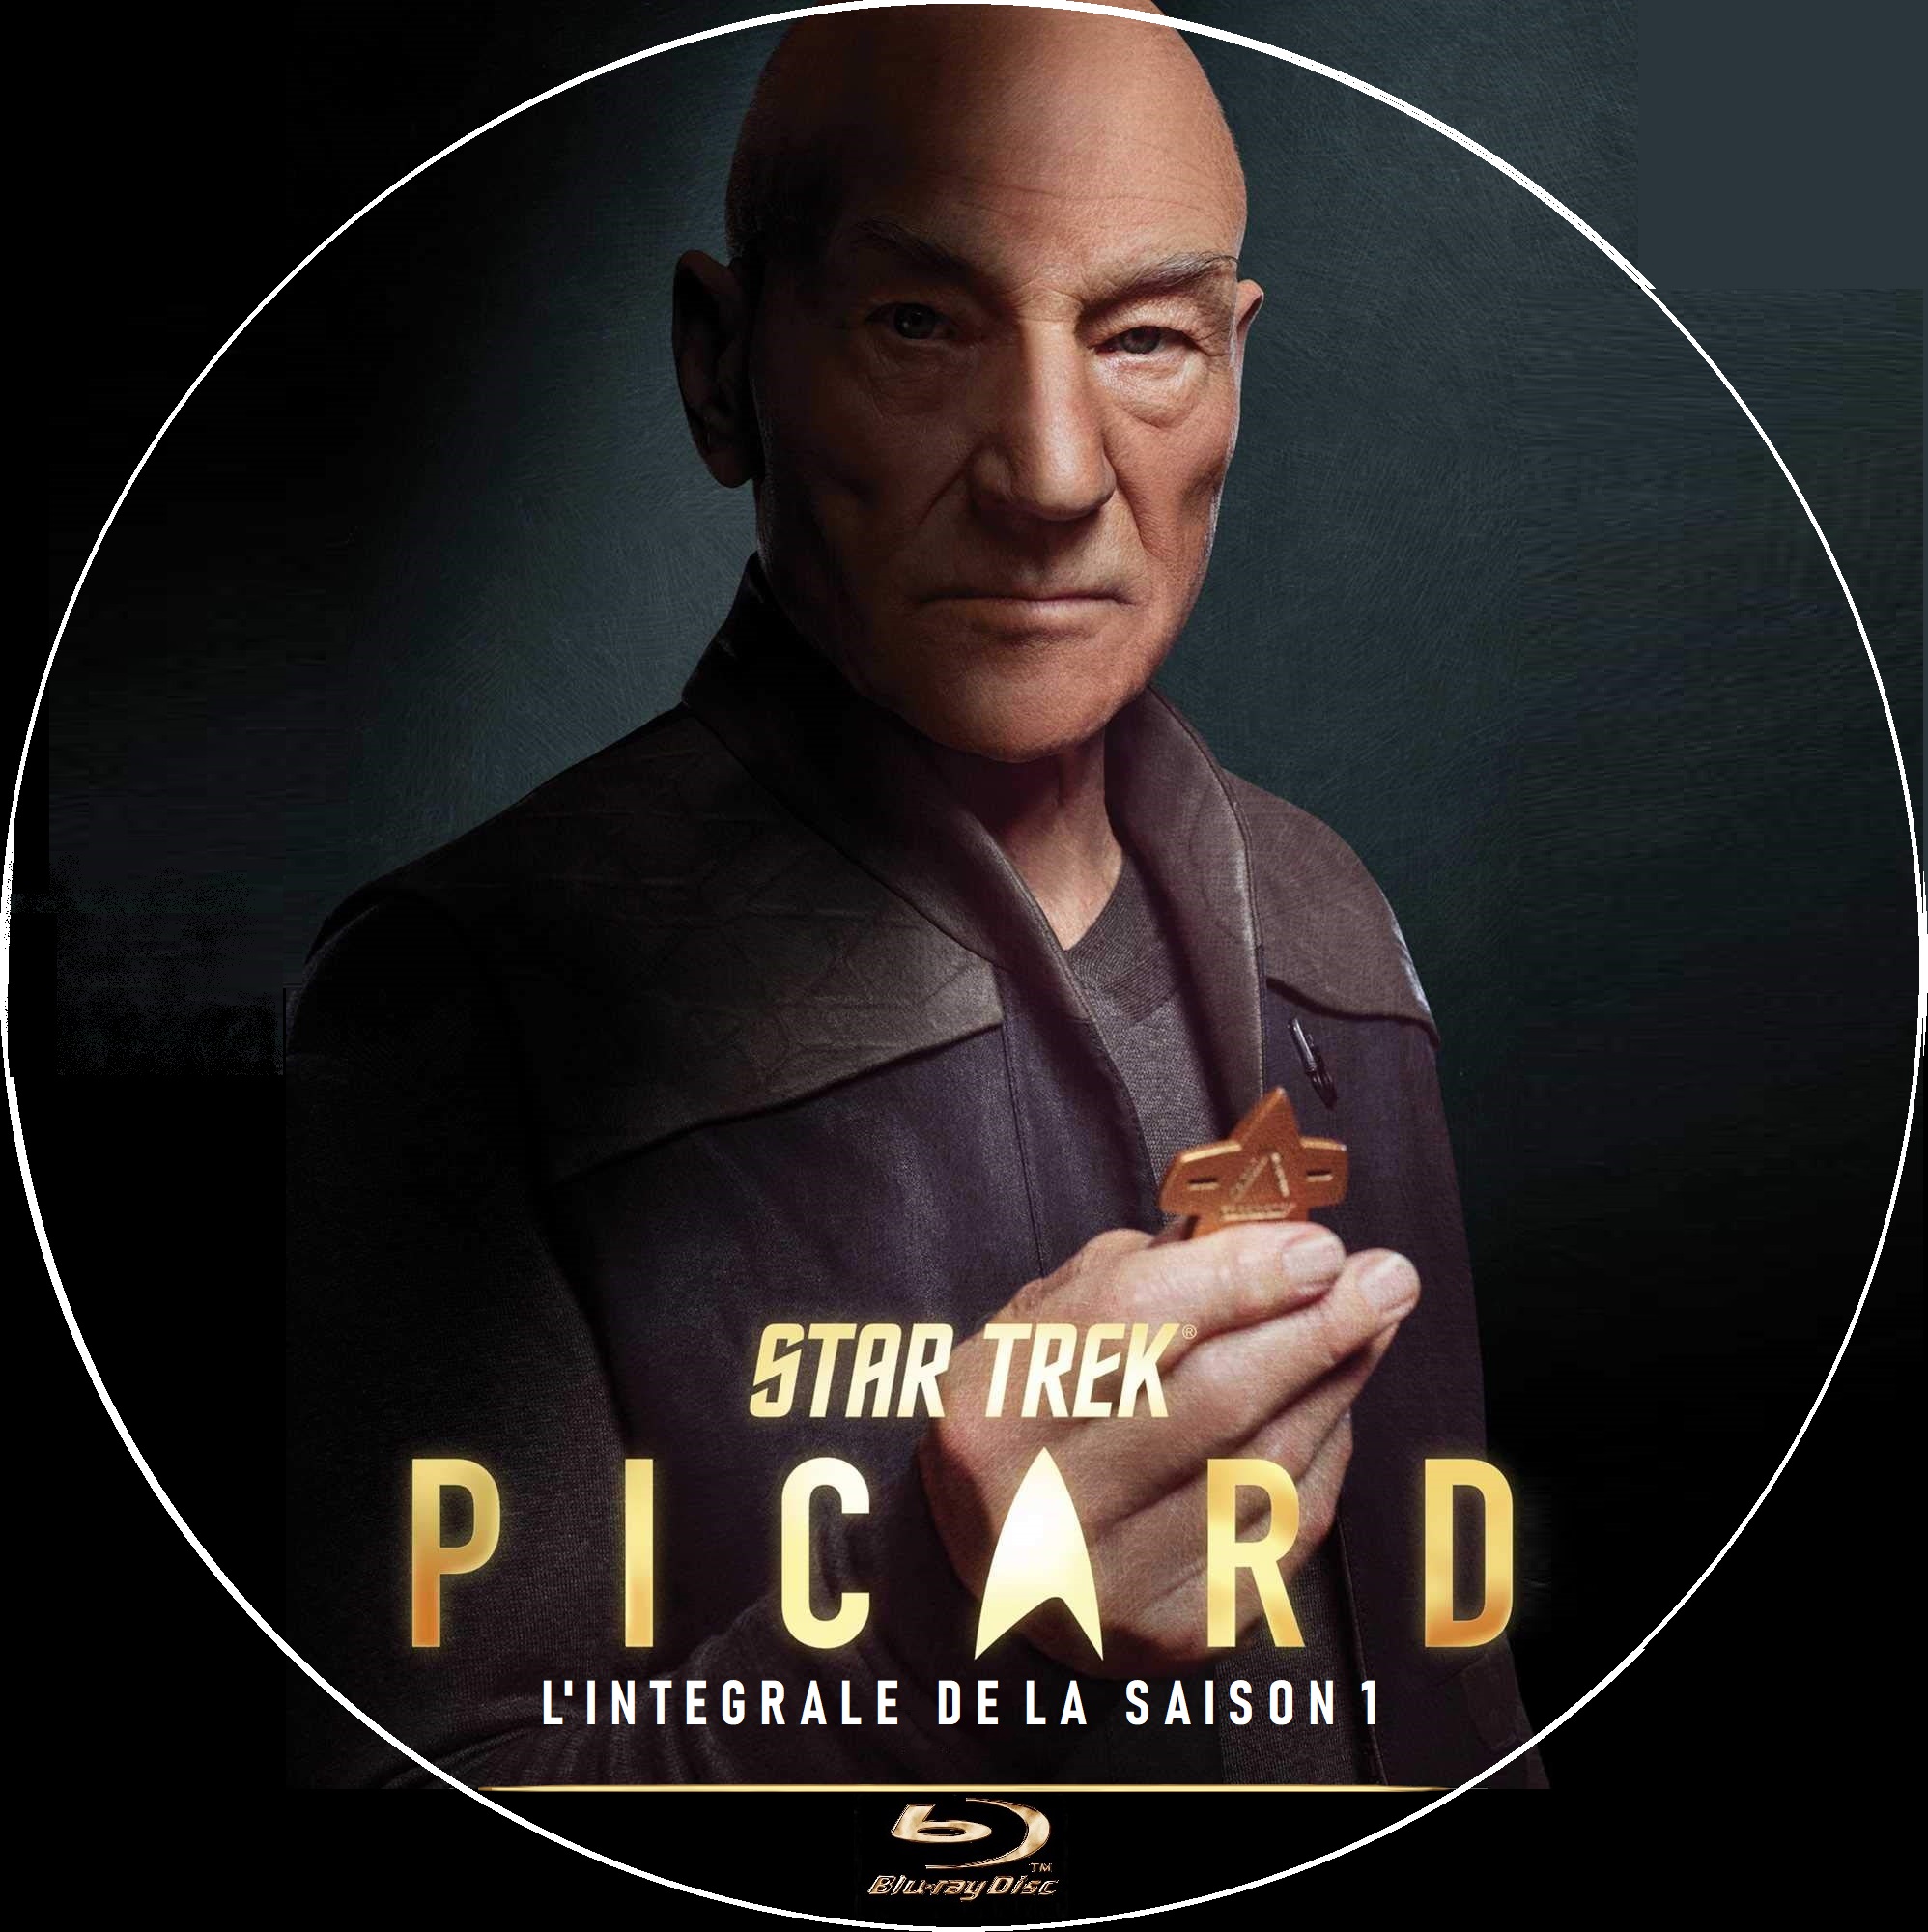 Star Trek Picard saison 1 Blu ray custom